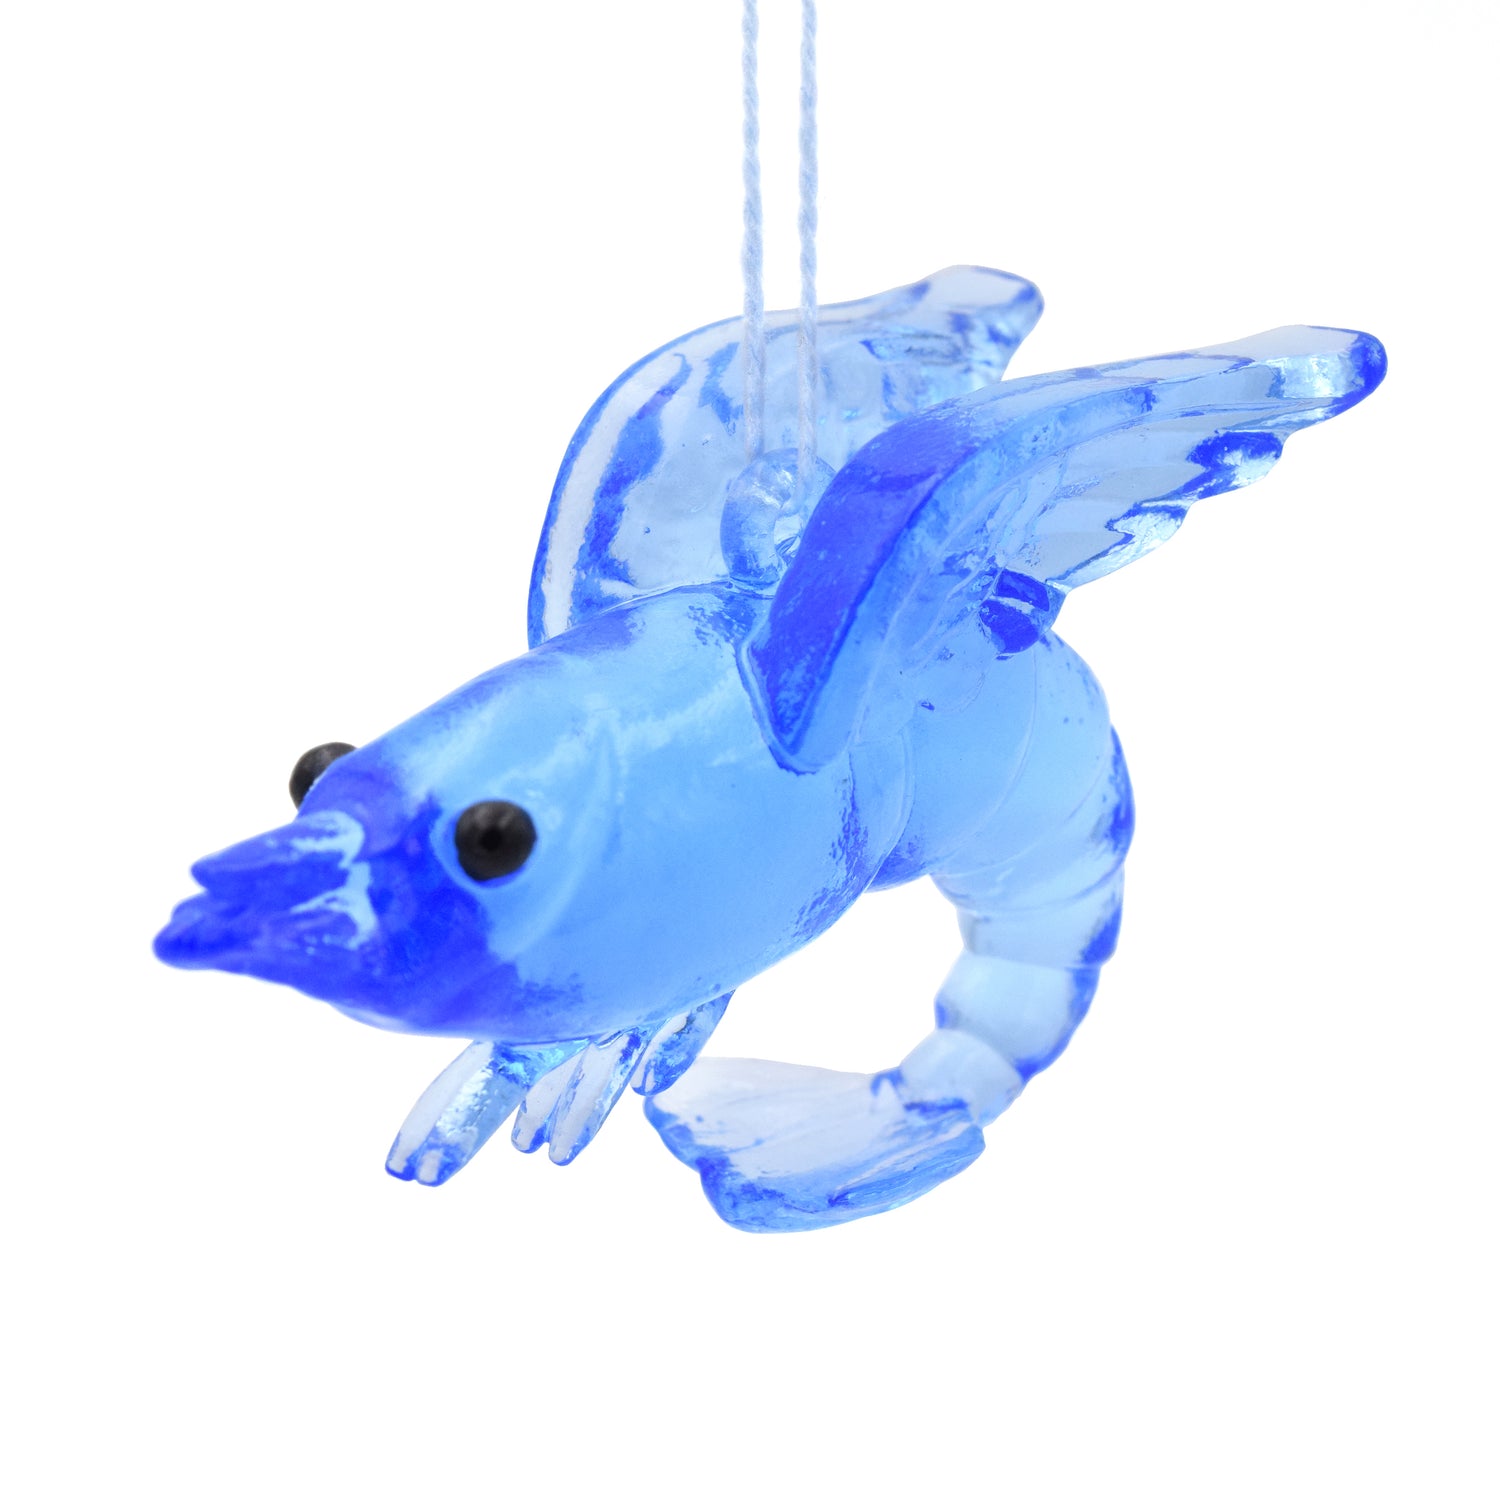  A translucent blue shrimp ornament. The shrimp has wings and beady black eyes.